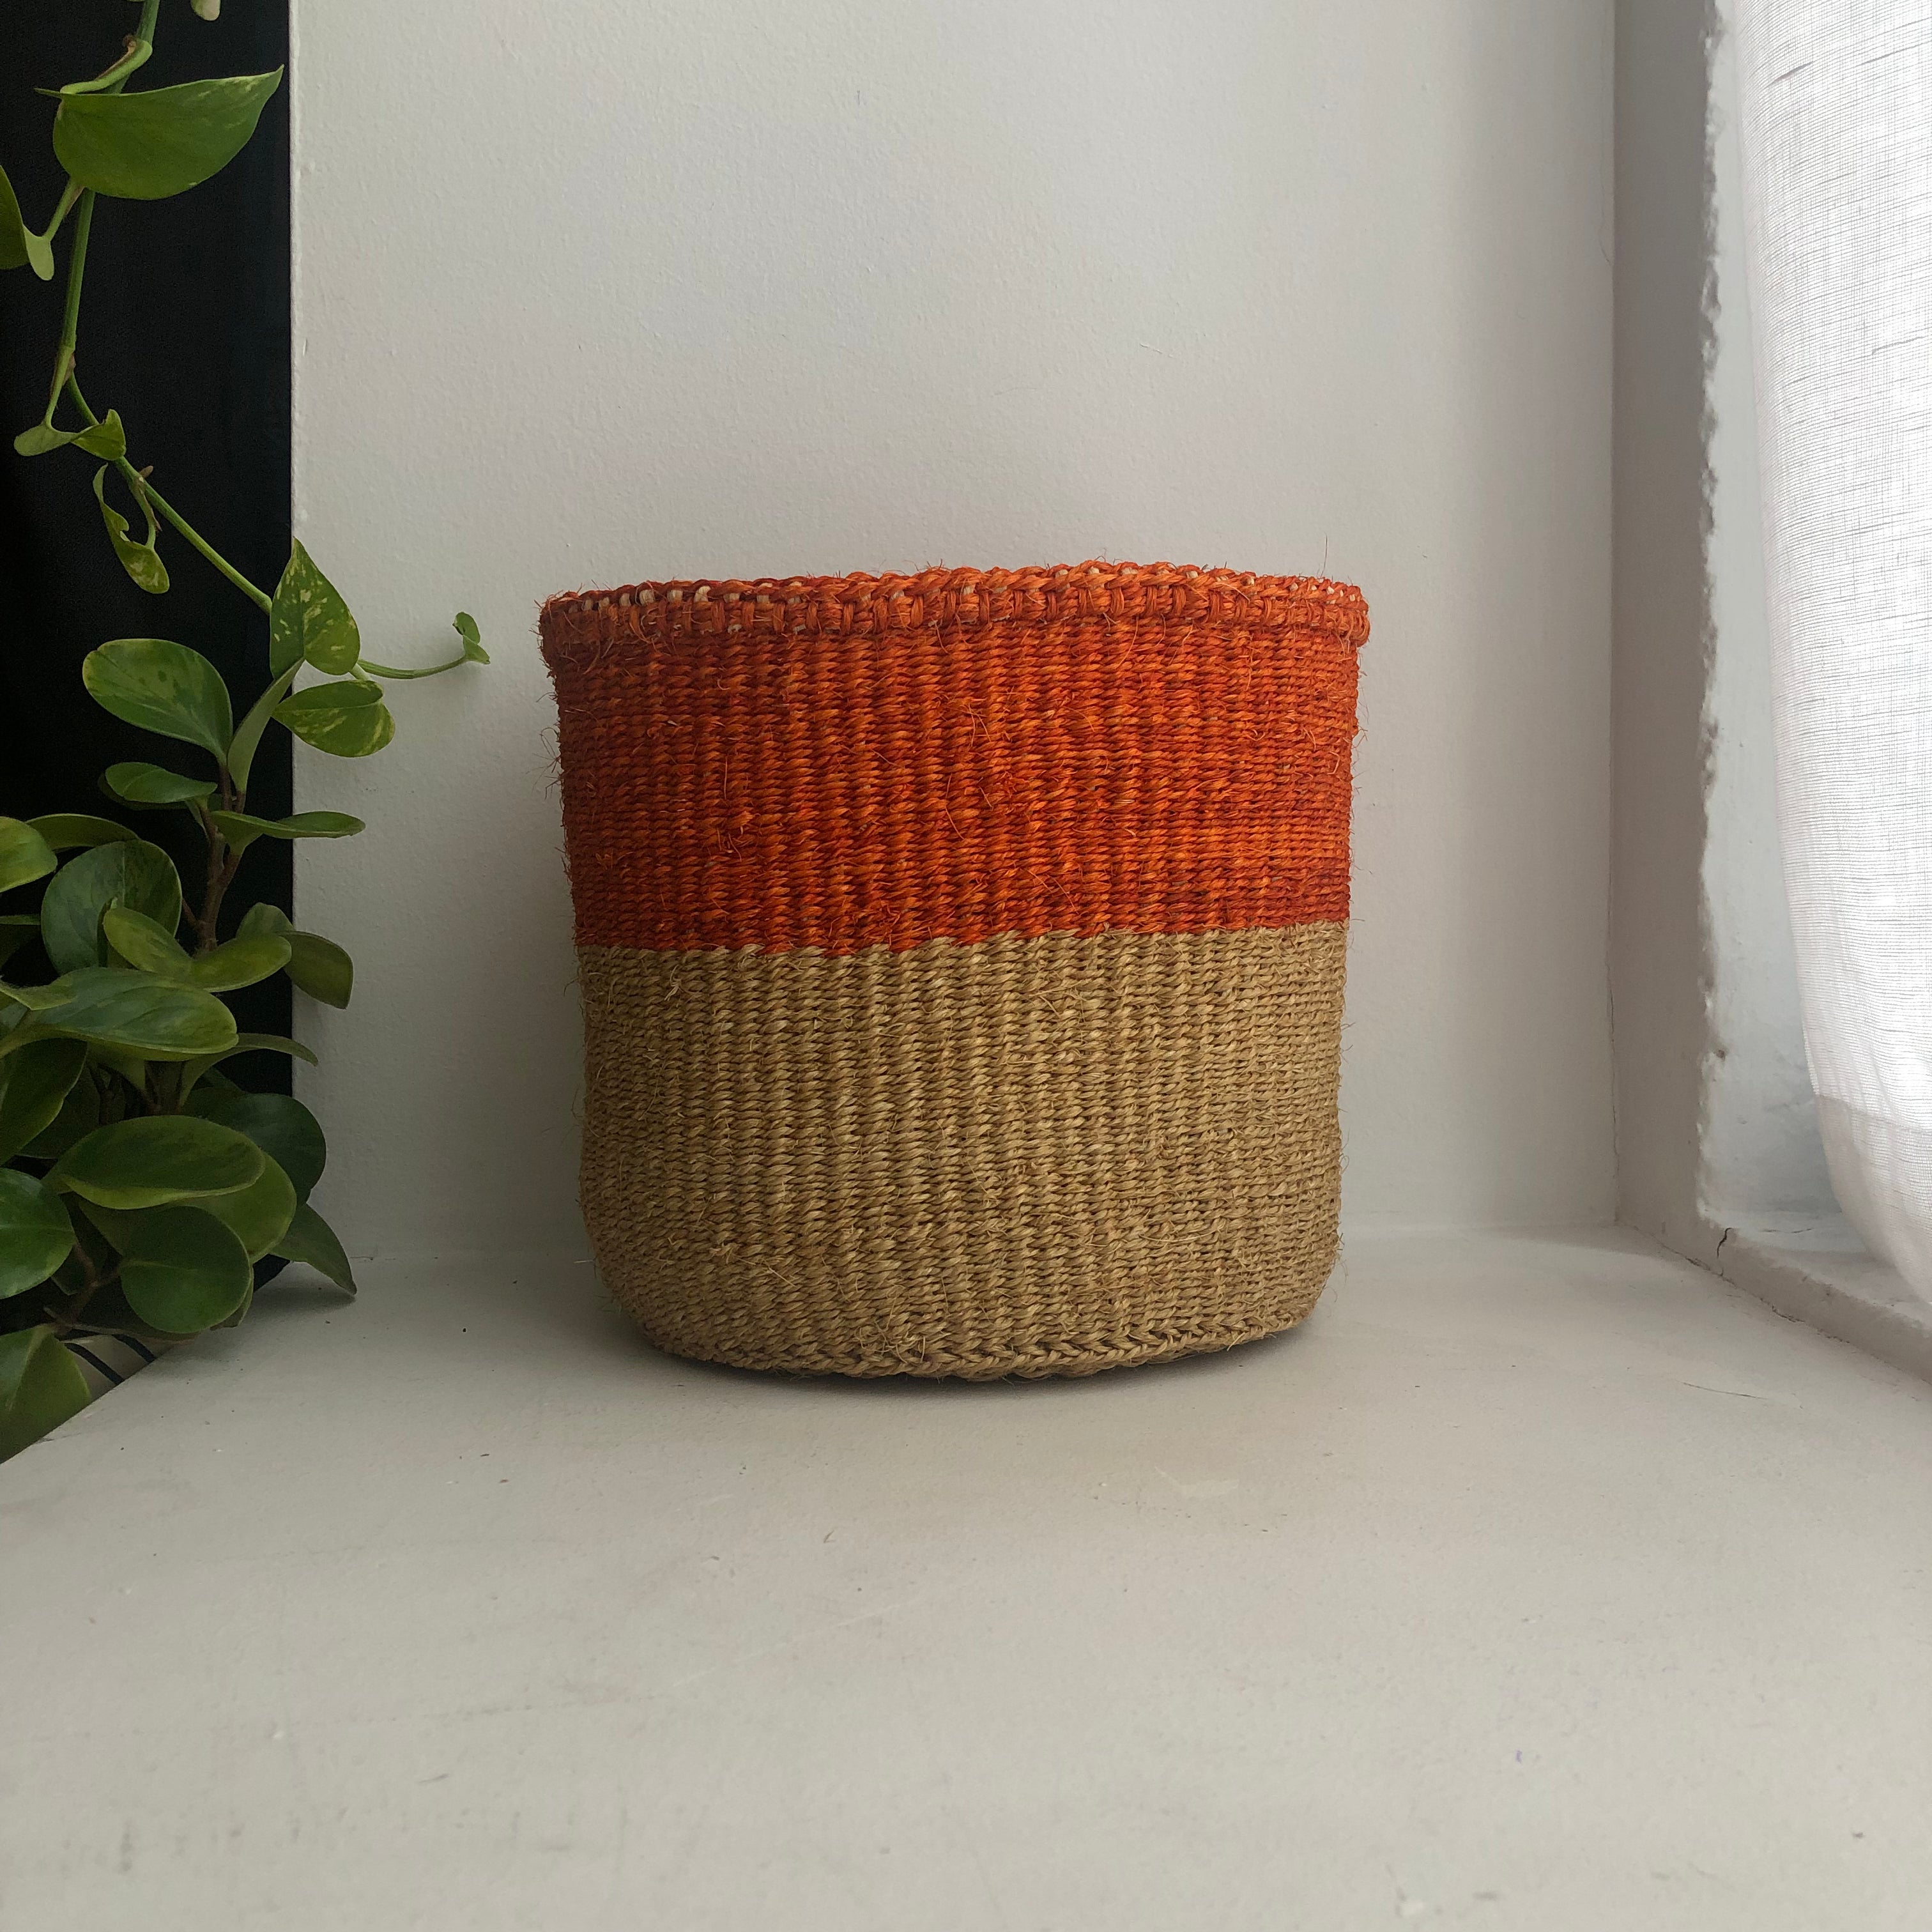 8" orange and natural basket